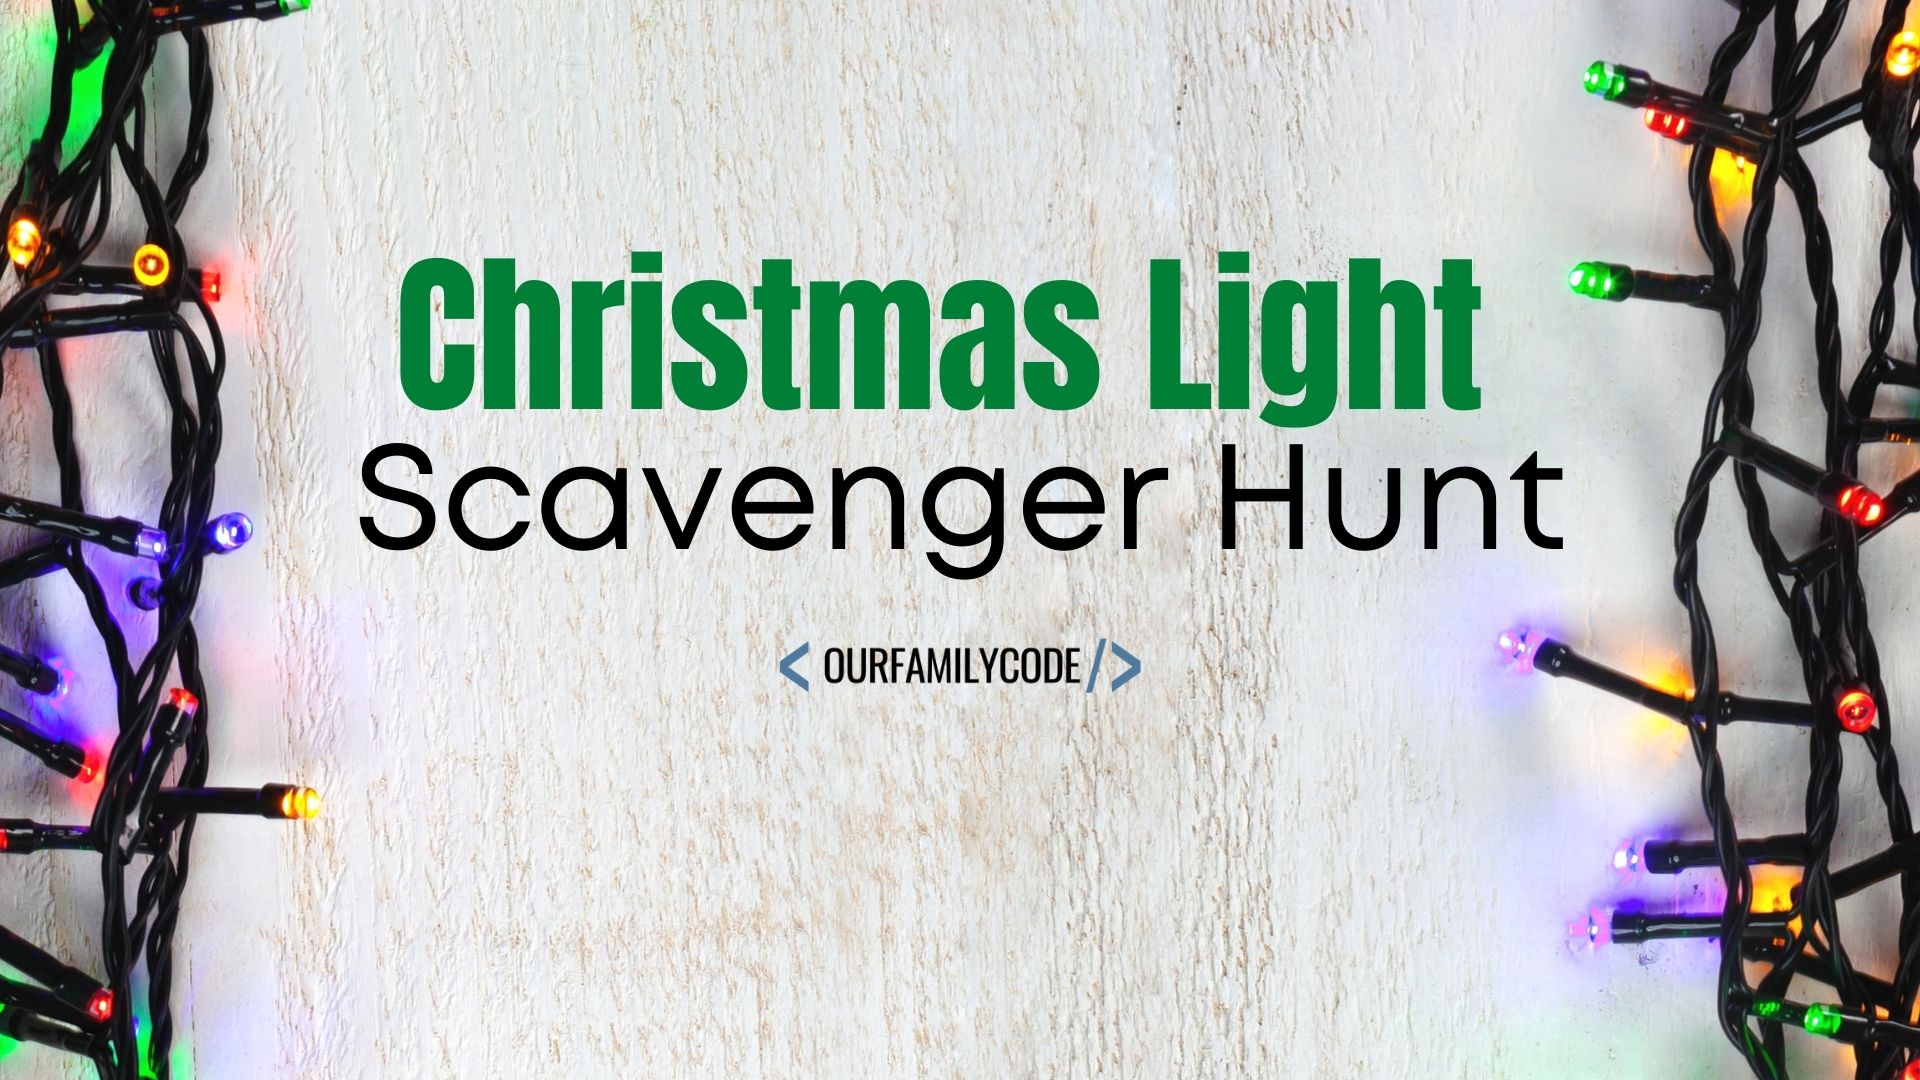 bh fb Christmas Light Scavenger Hunt family tradition